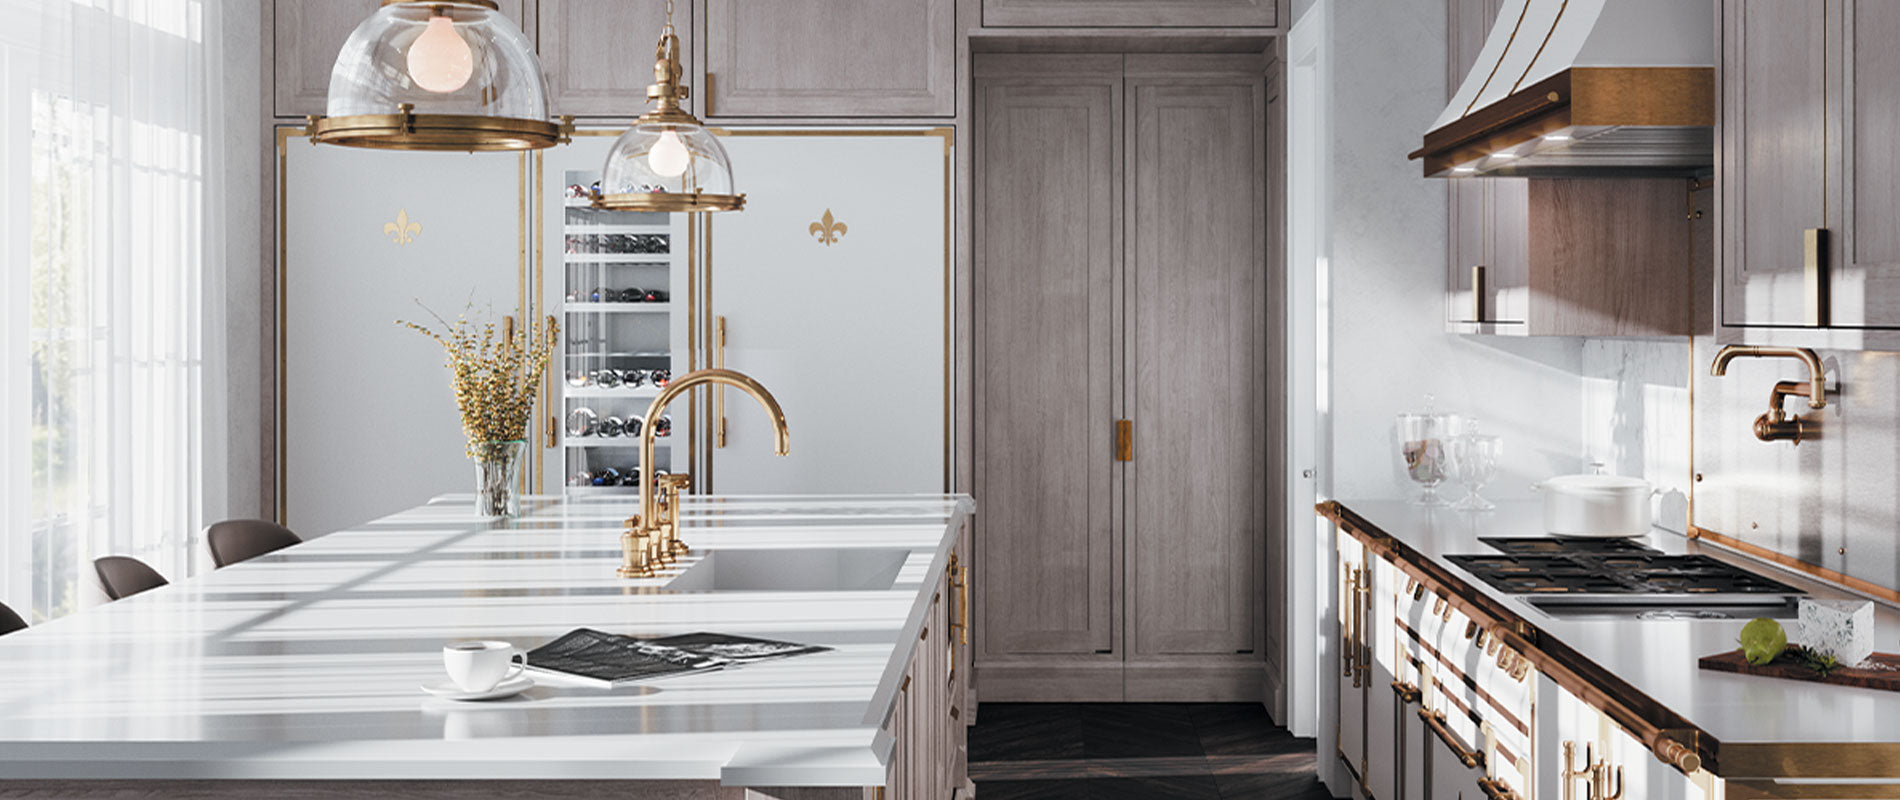 slice of paris | luxury french kitchen design | l'atelier paris